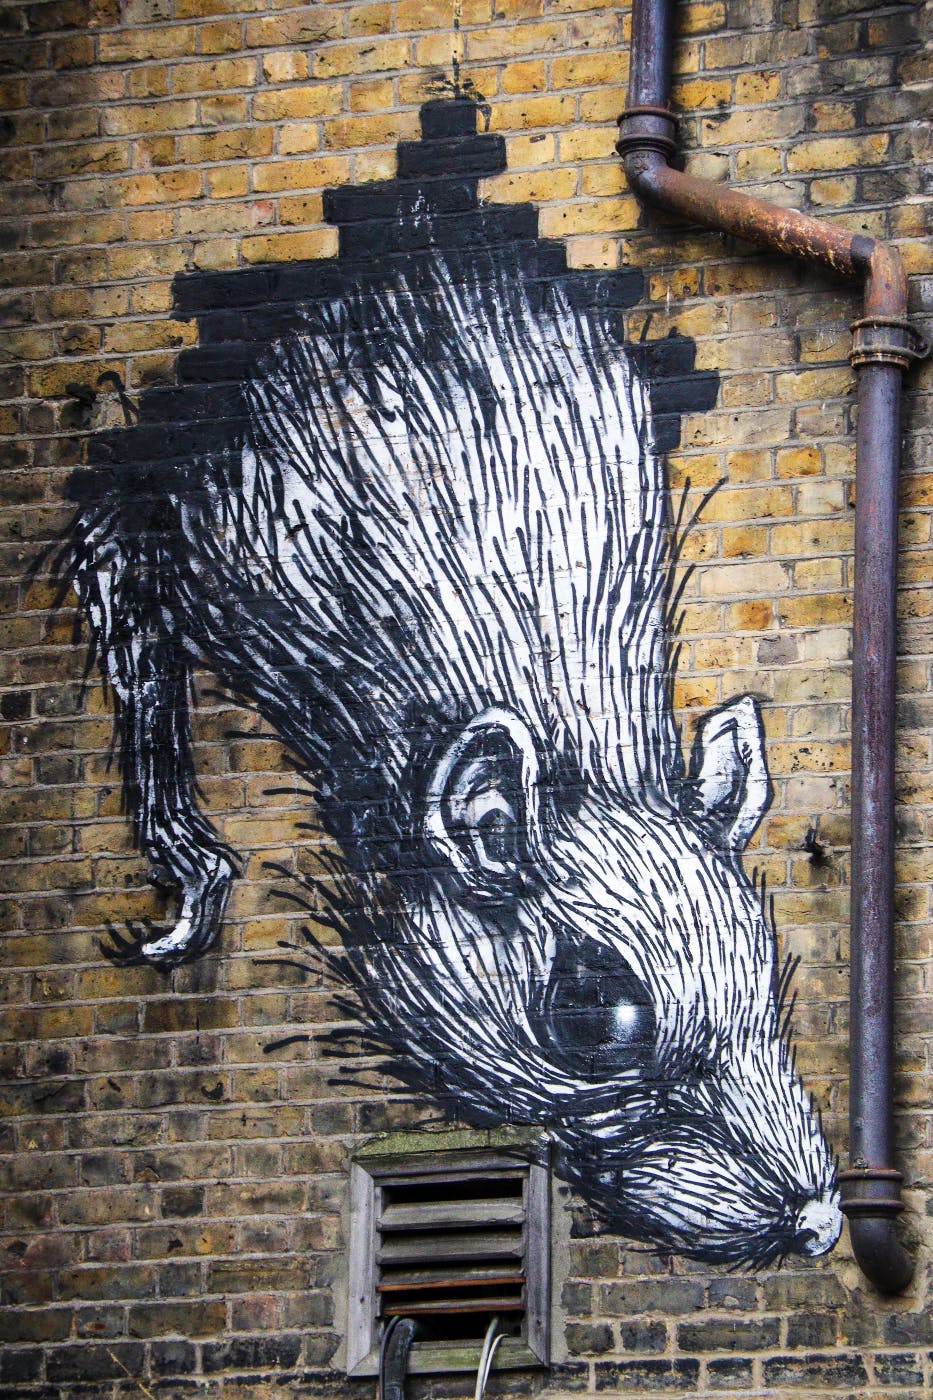 graffiti of a rat coming out of a brick wall